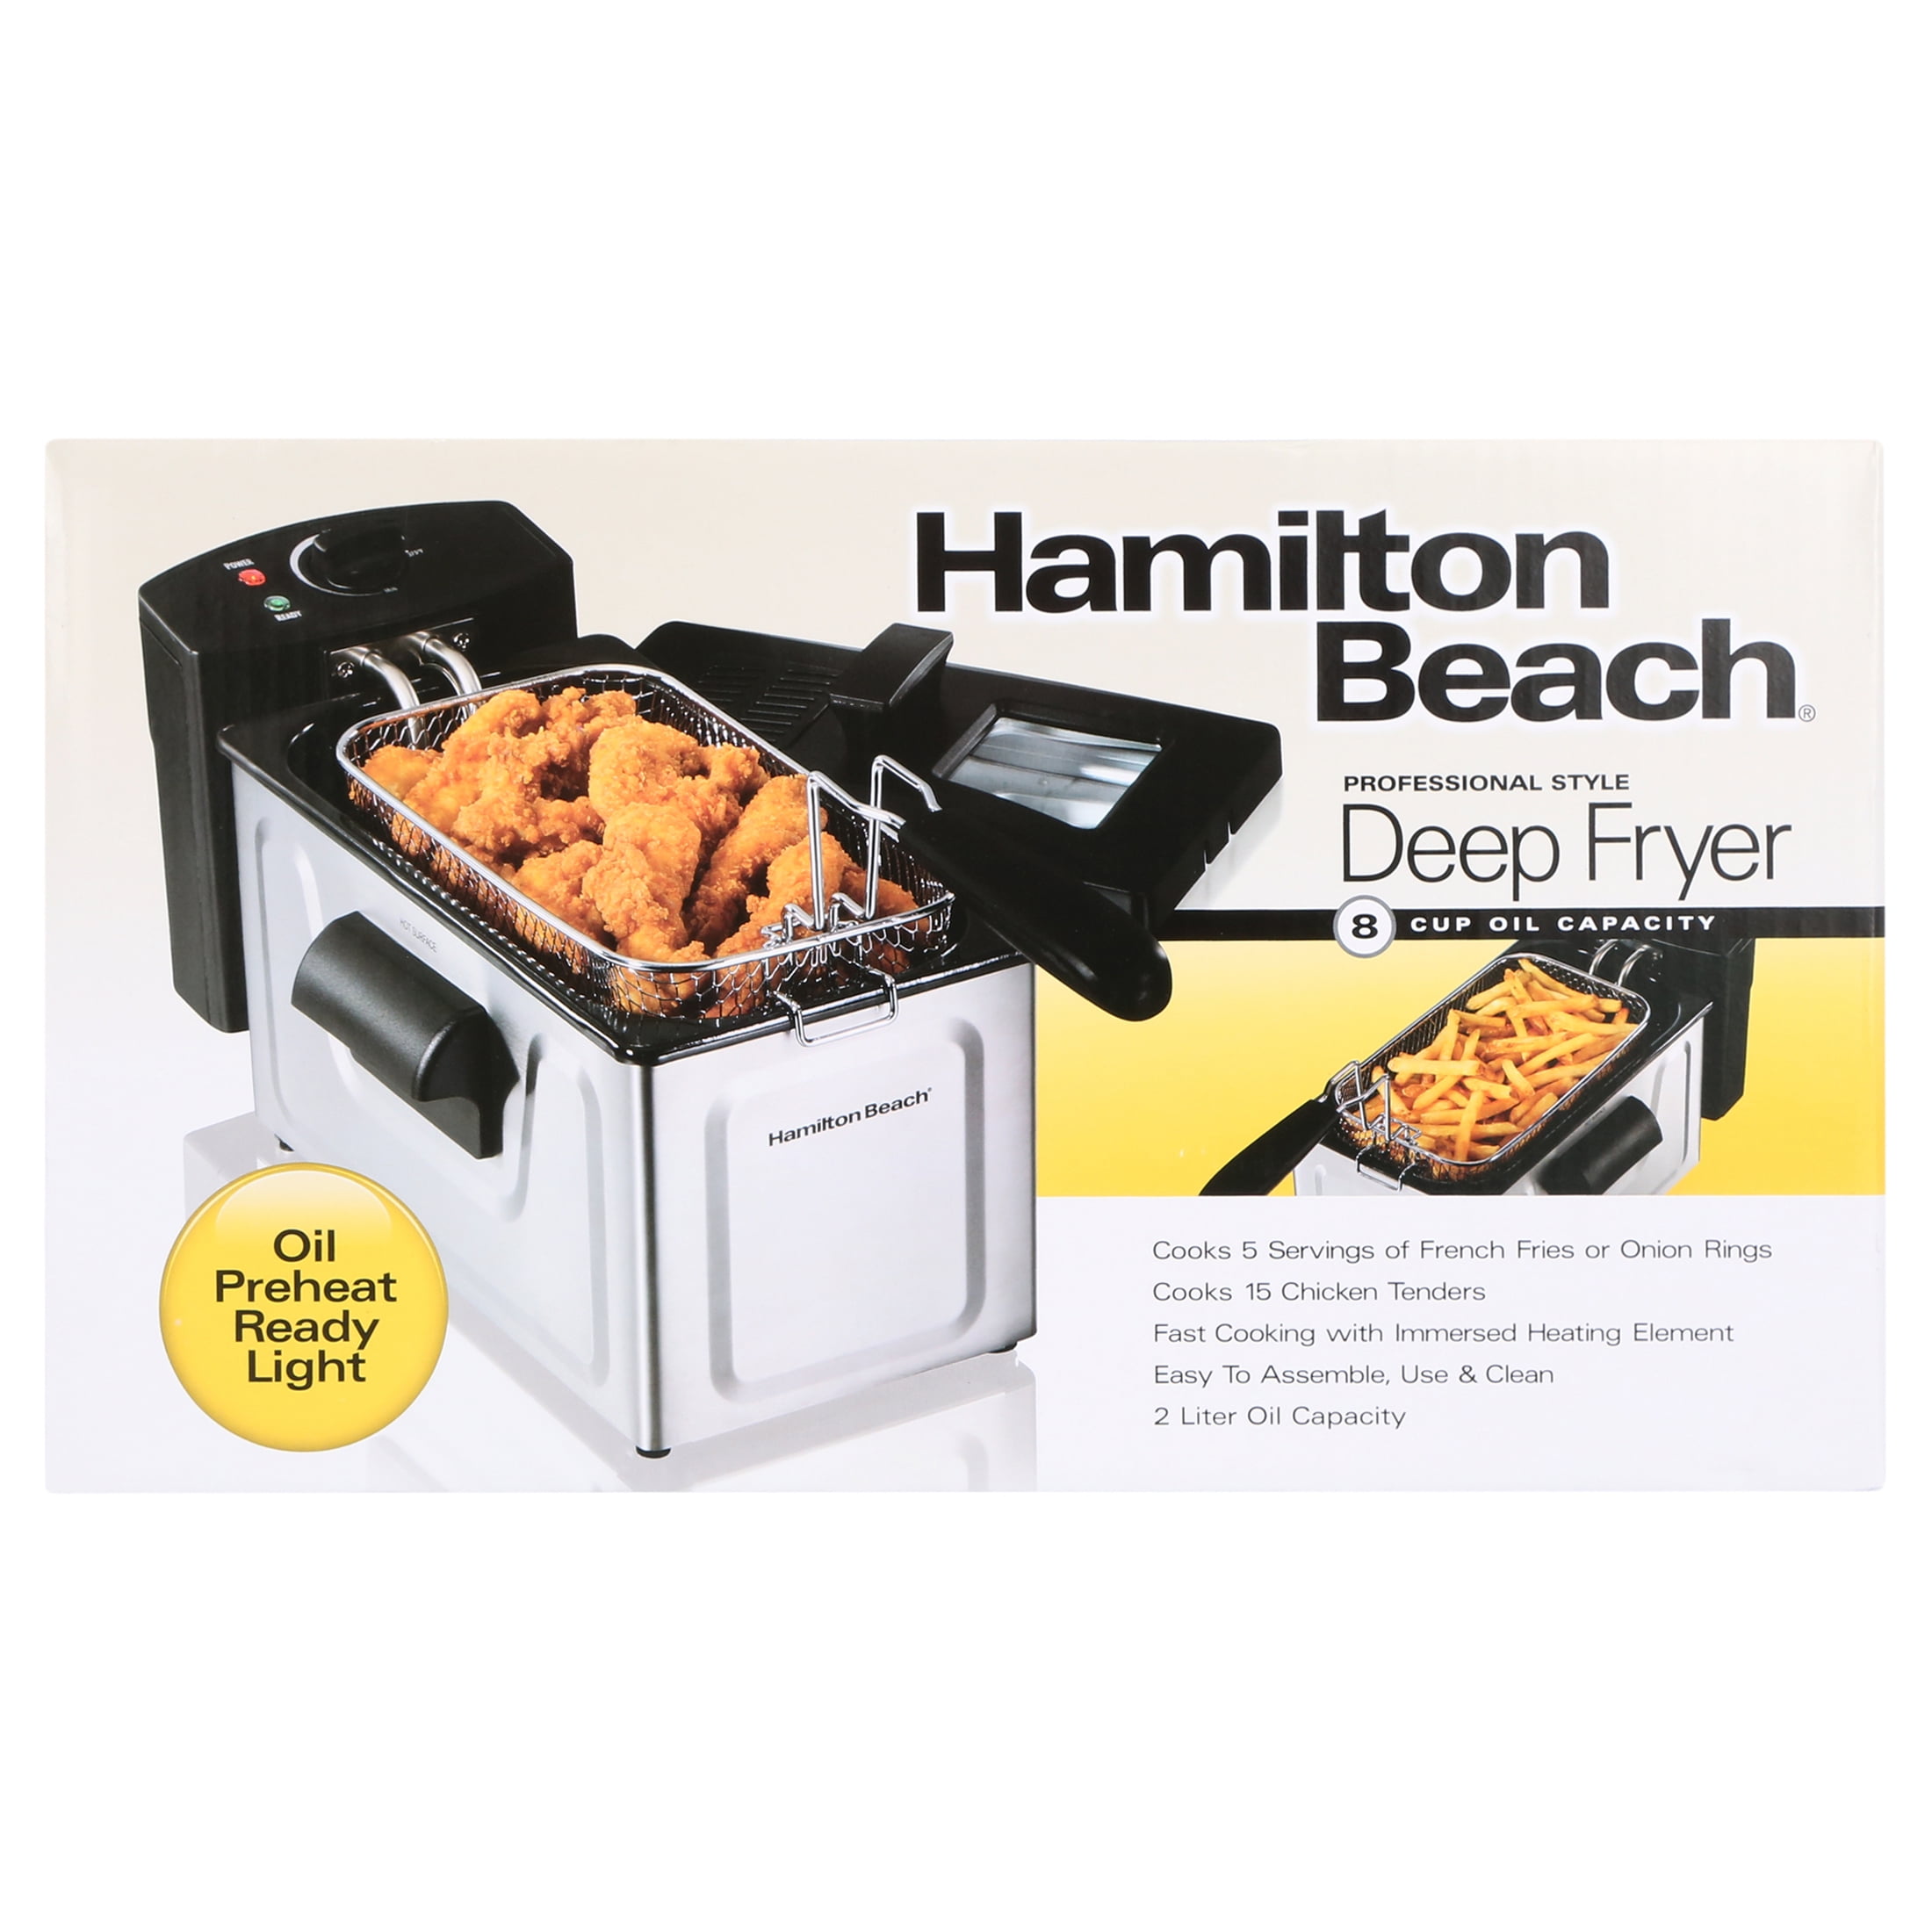 Hamilton Beach Cool-Touch Deep Fryer, 2 Liters/8 Cup Oil Capacity